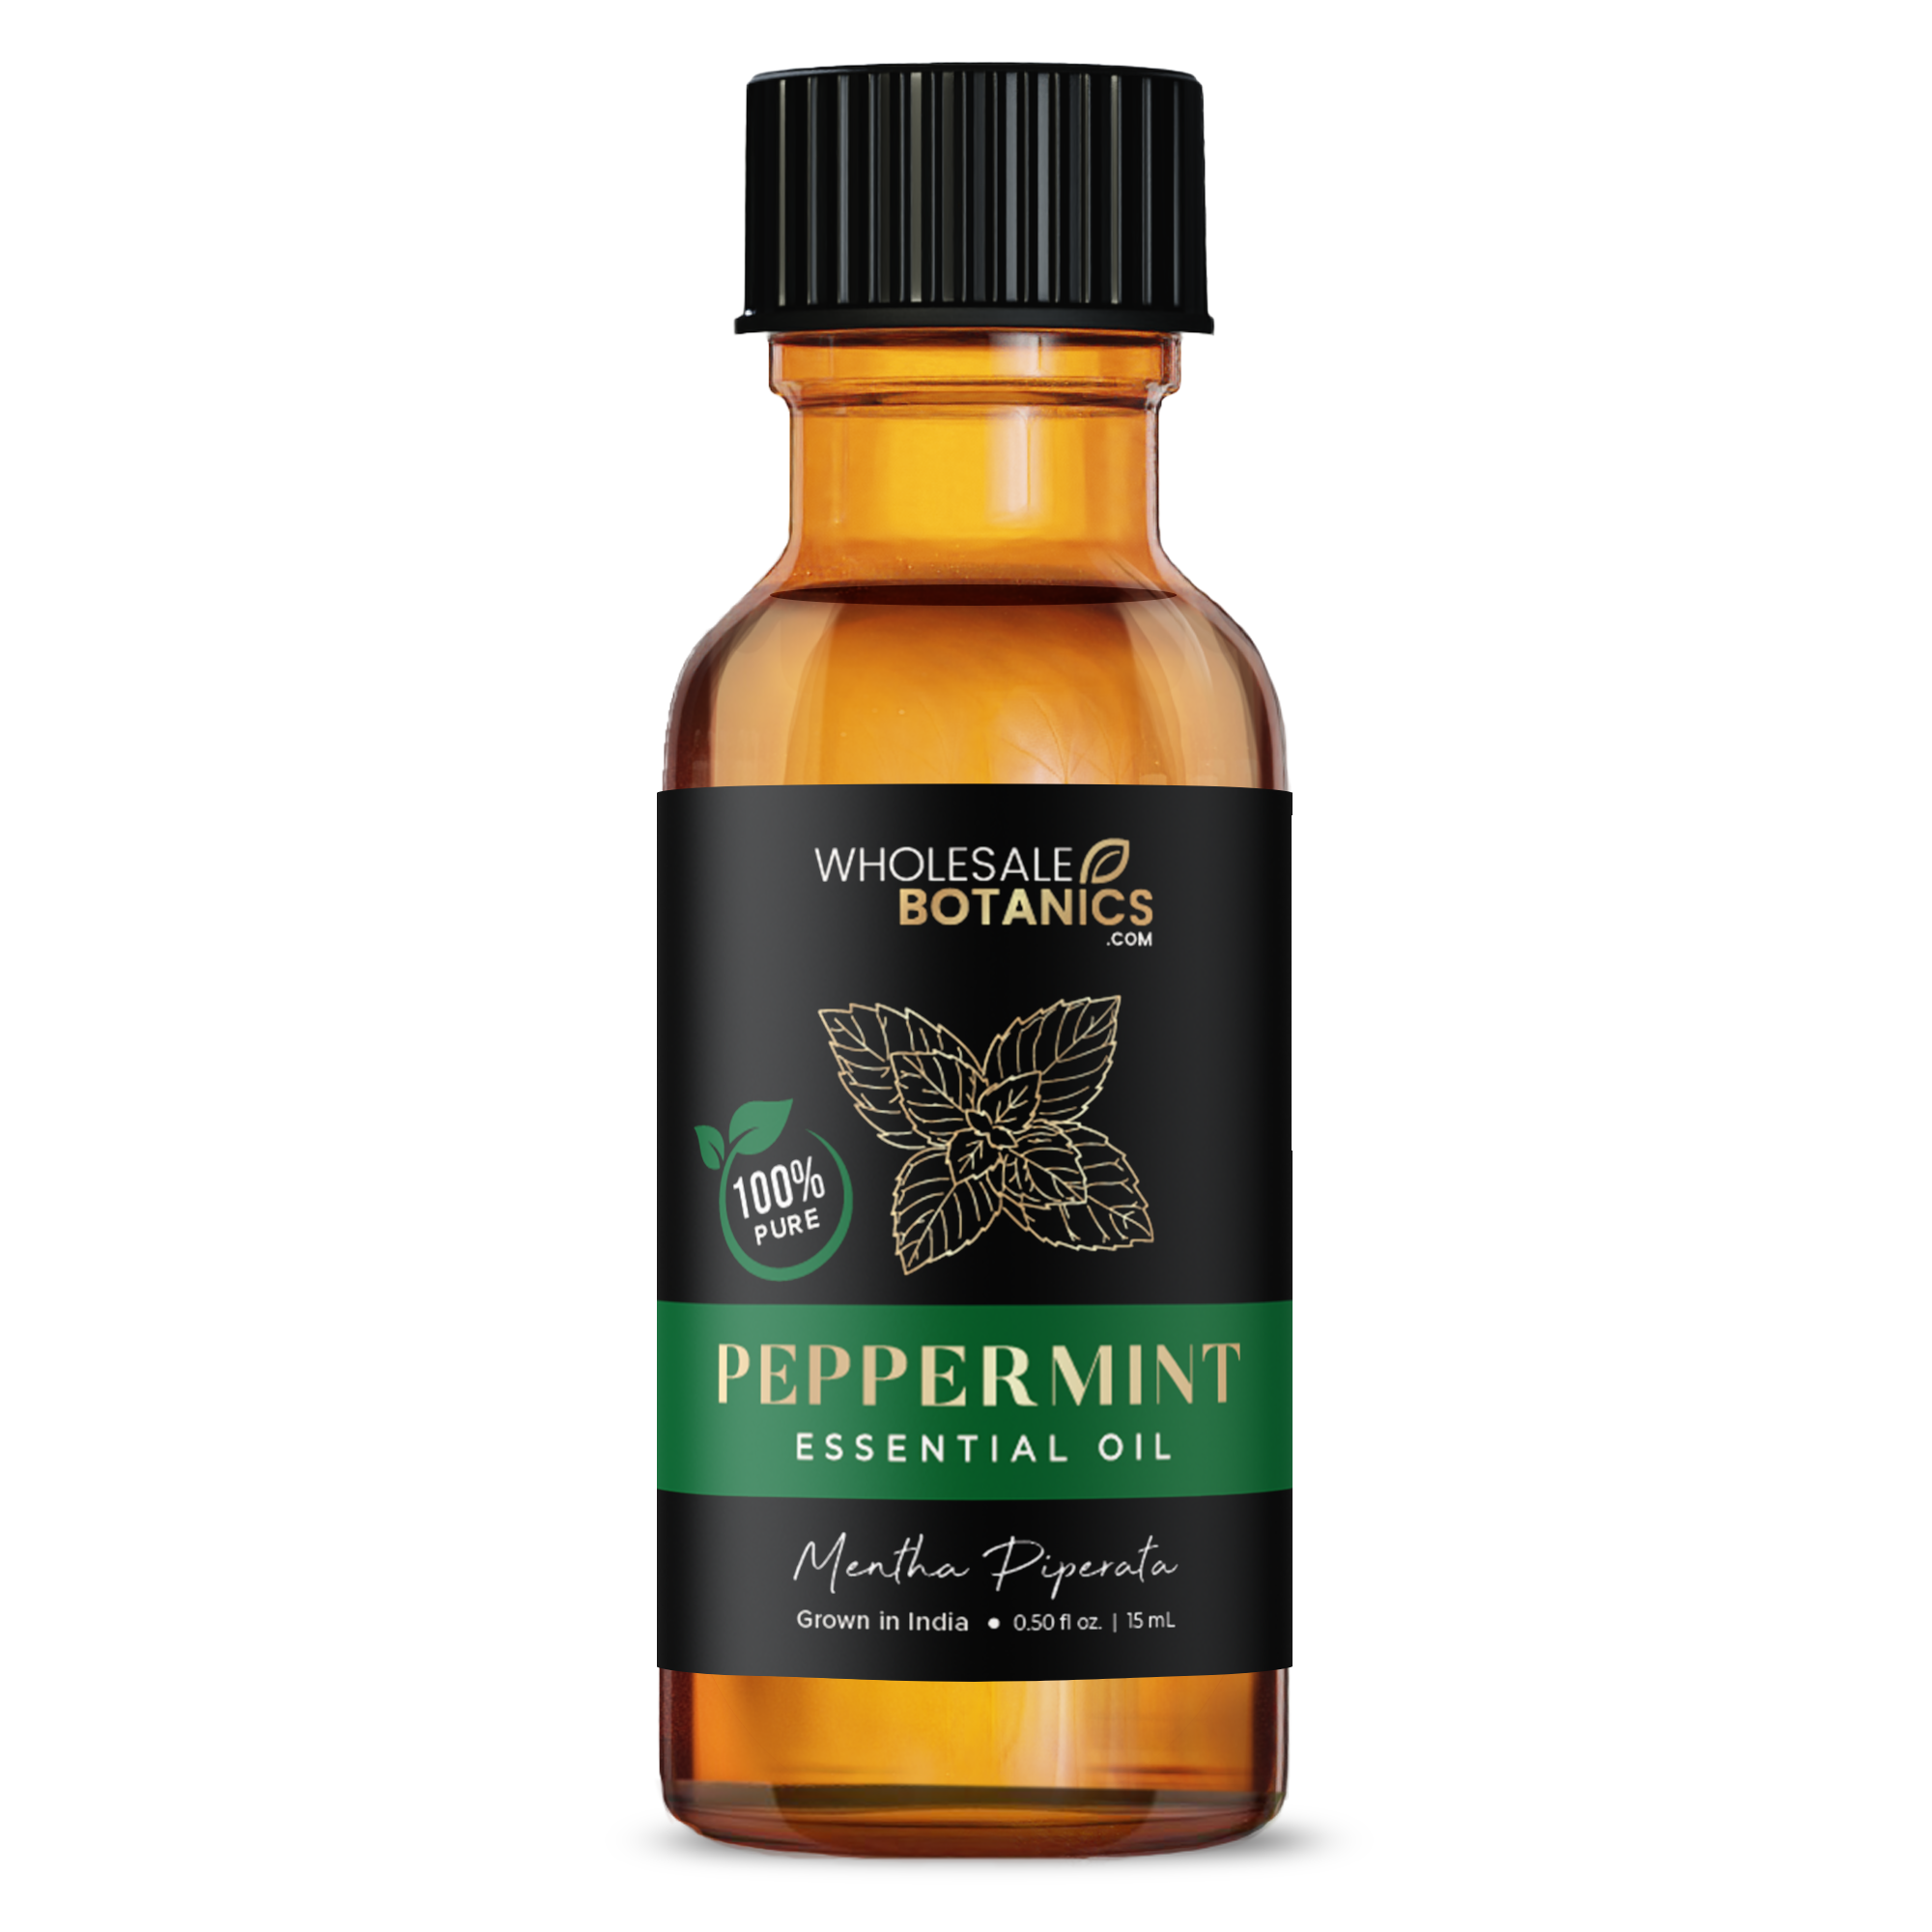 Purity Peppermint Essential Oil - Mentha Piperita - 0.5 oz